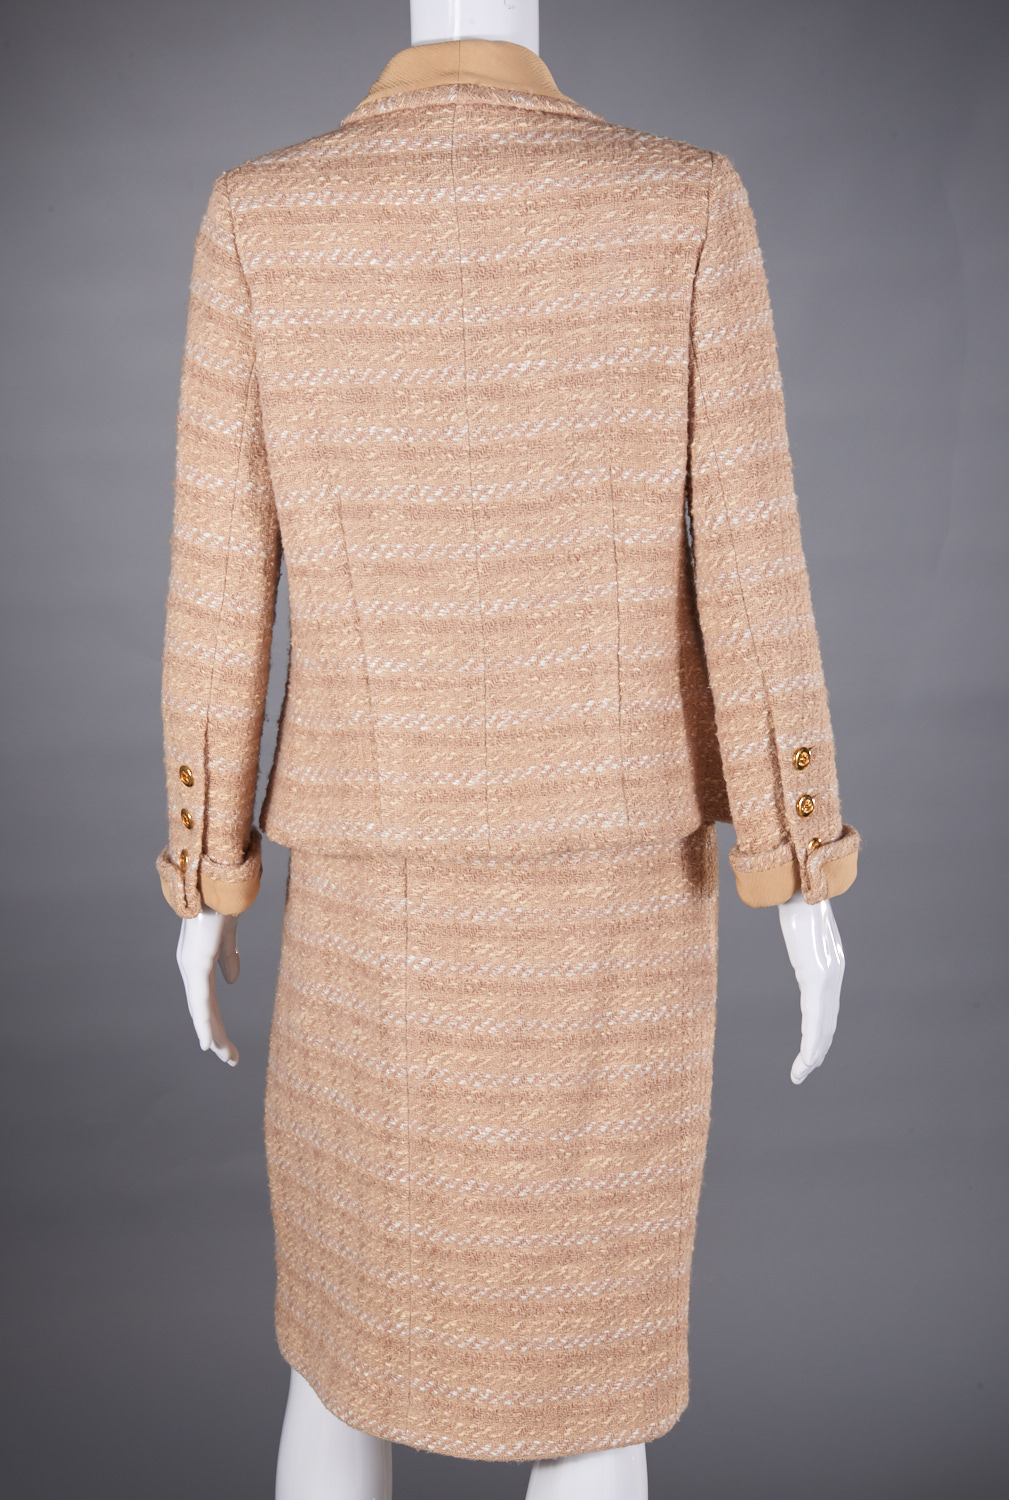 Sold at Auction: CHANEL Vintage 1960s Boucle & Fur Coat